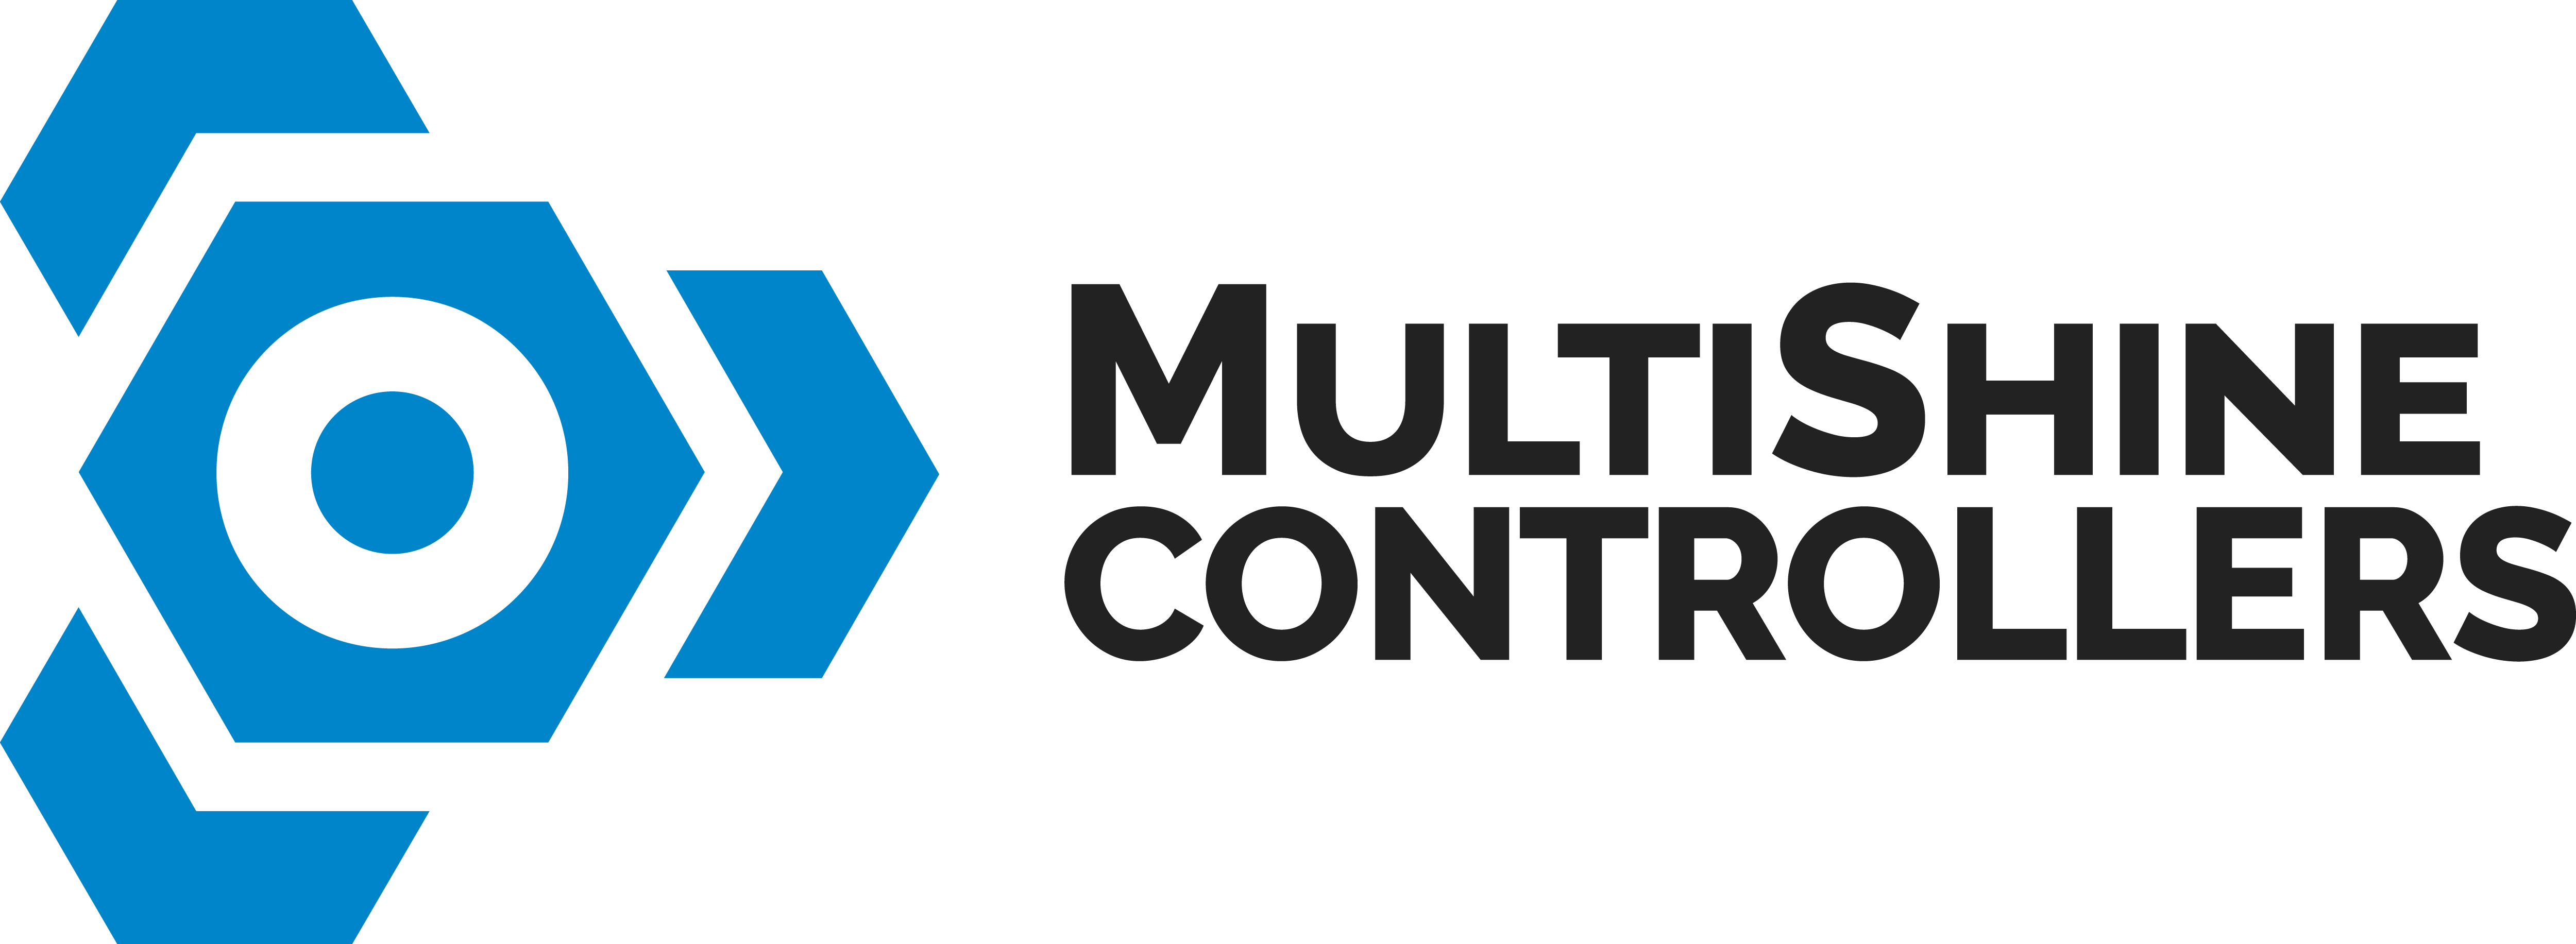 MultiShine Controllers